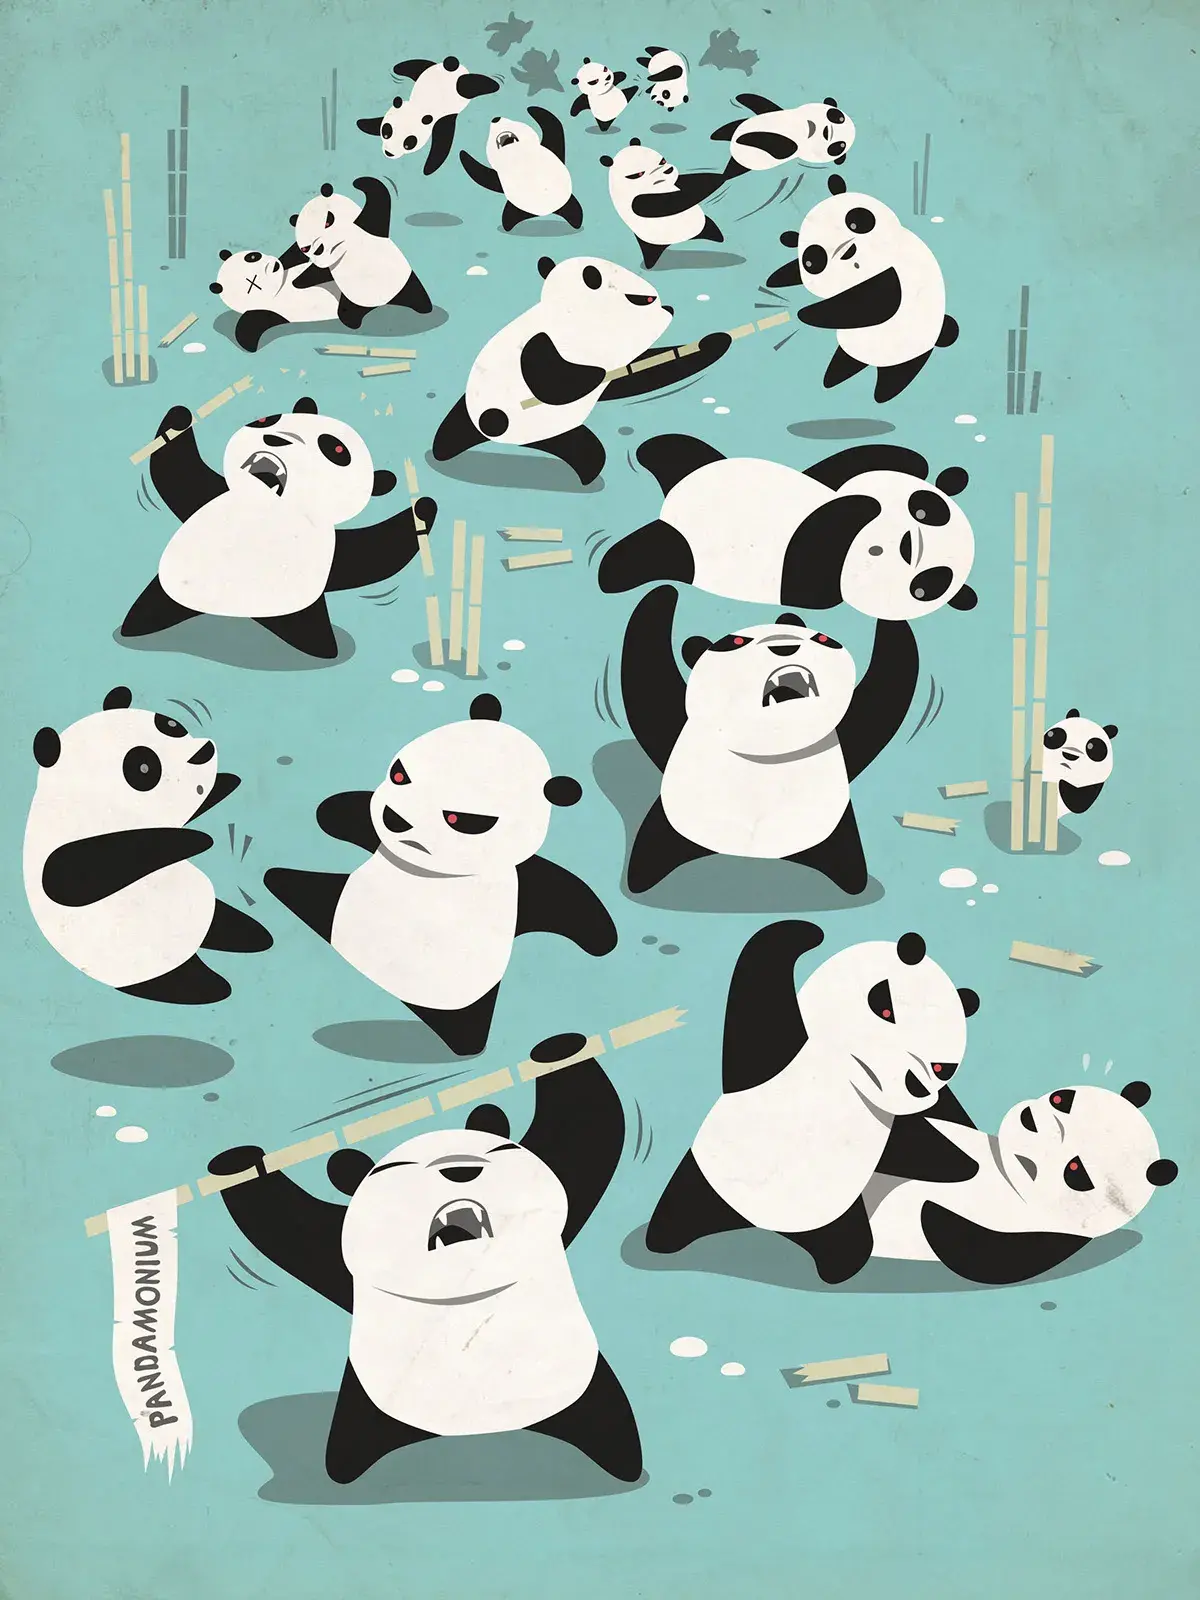 Bdw illustration panda pandomonium marco palmieri